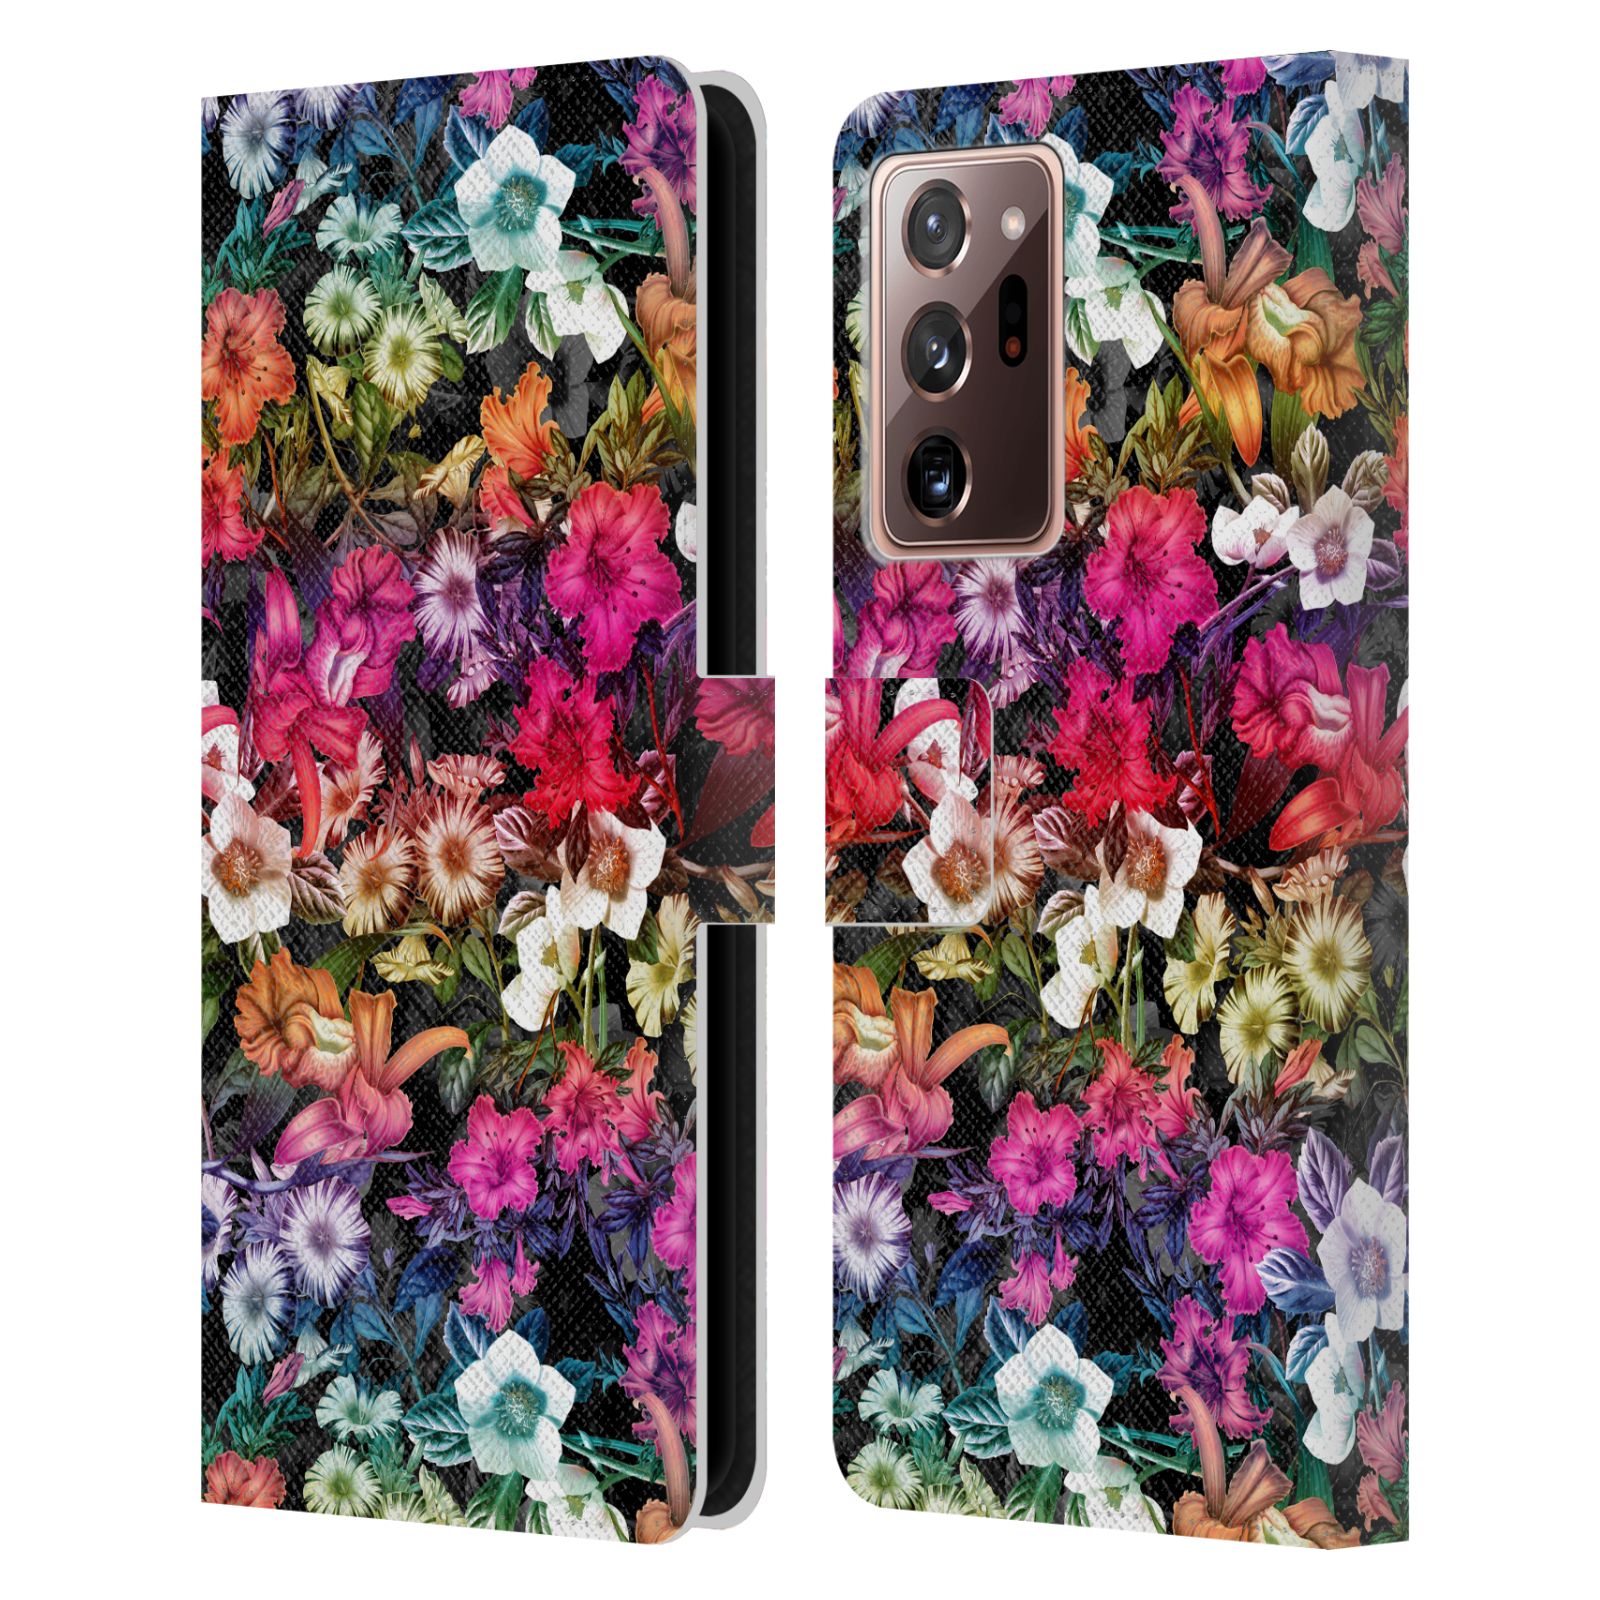 Pouzdro HEAD CASE pro mobil Samsung Galaxy Note 20 ULTRA  - Burcu - Květiny multikolor